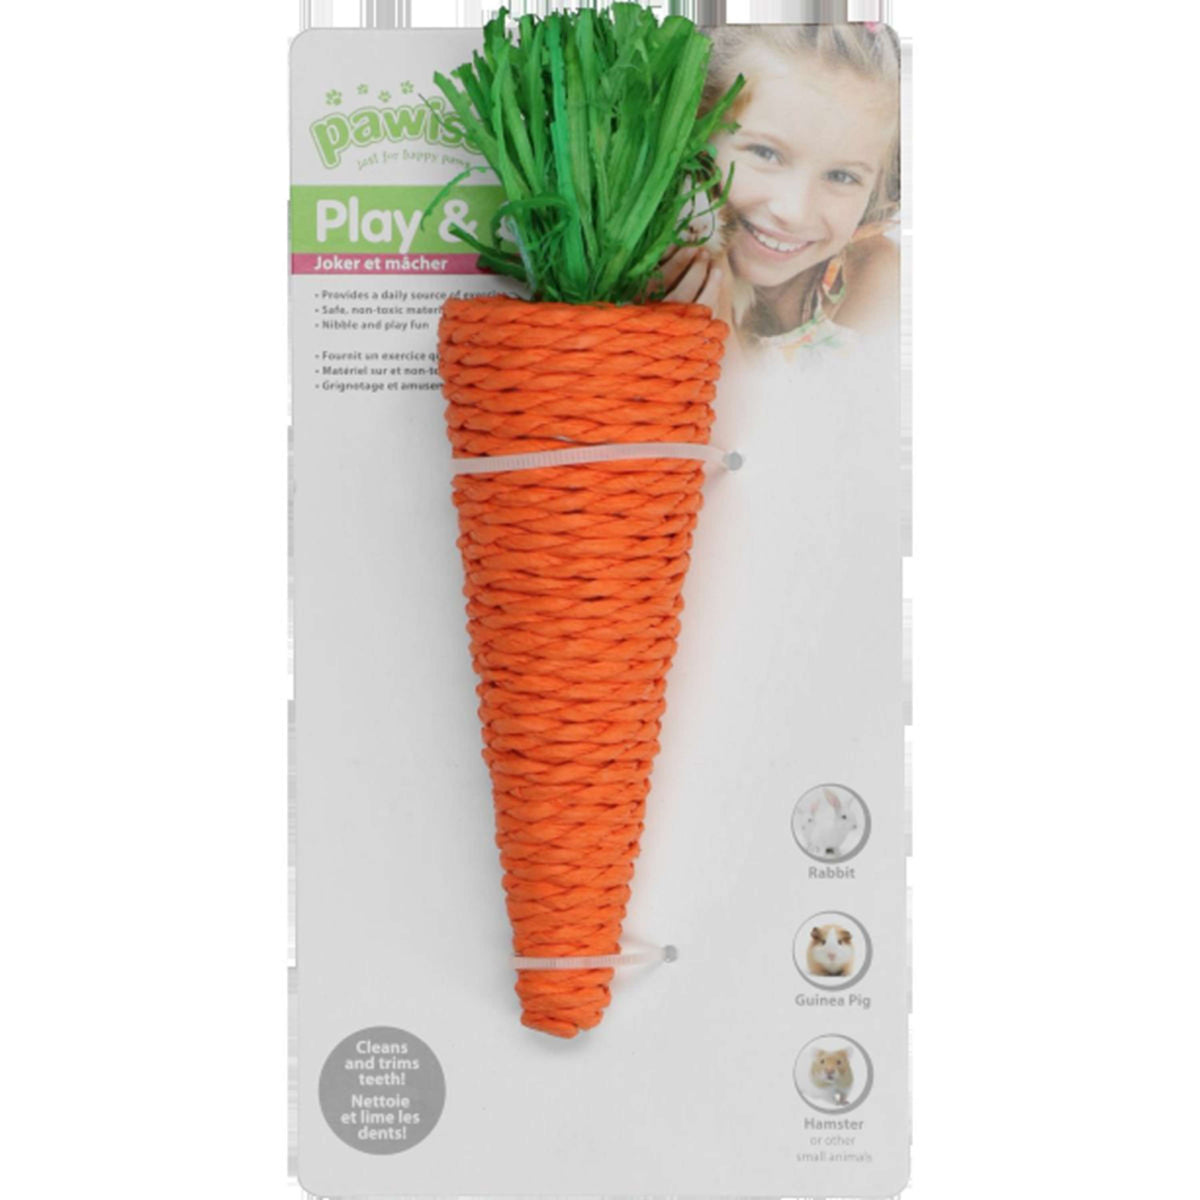 Pawise LW Nibblers Carrot Corn Husk Chews